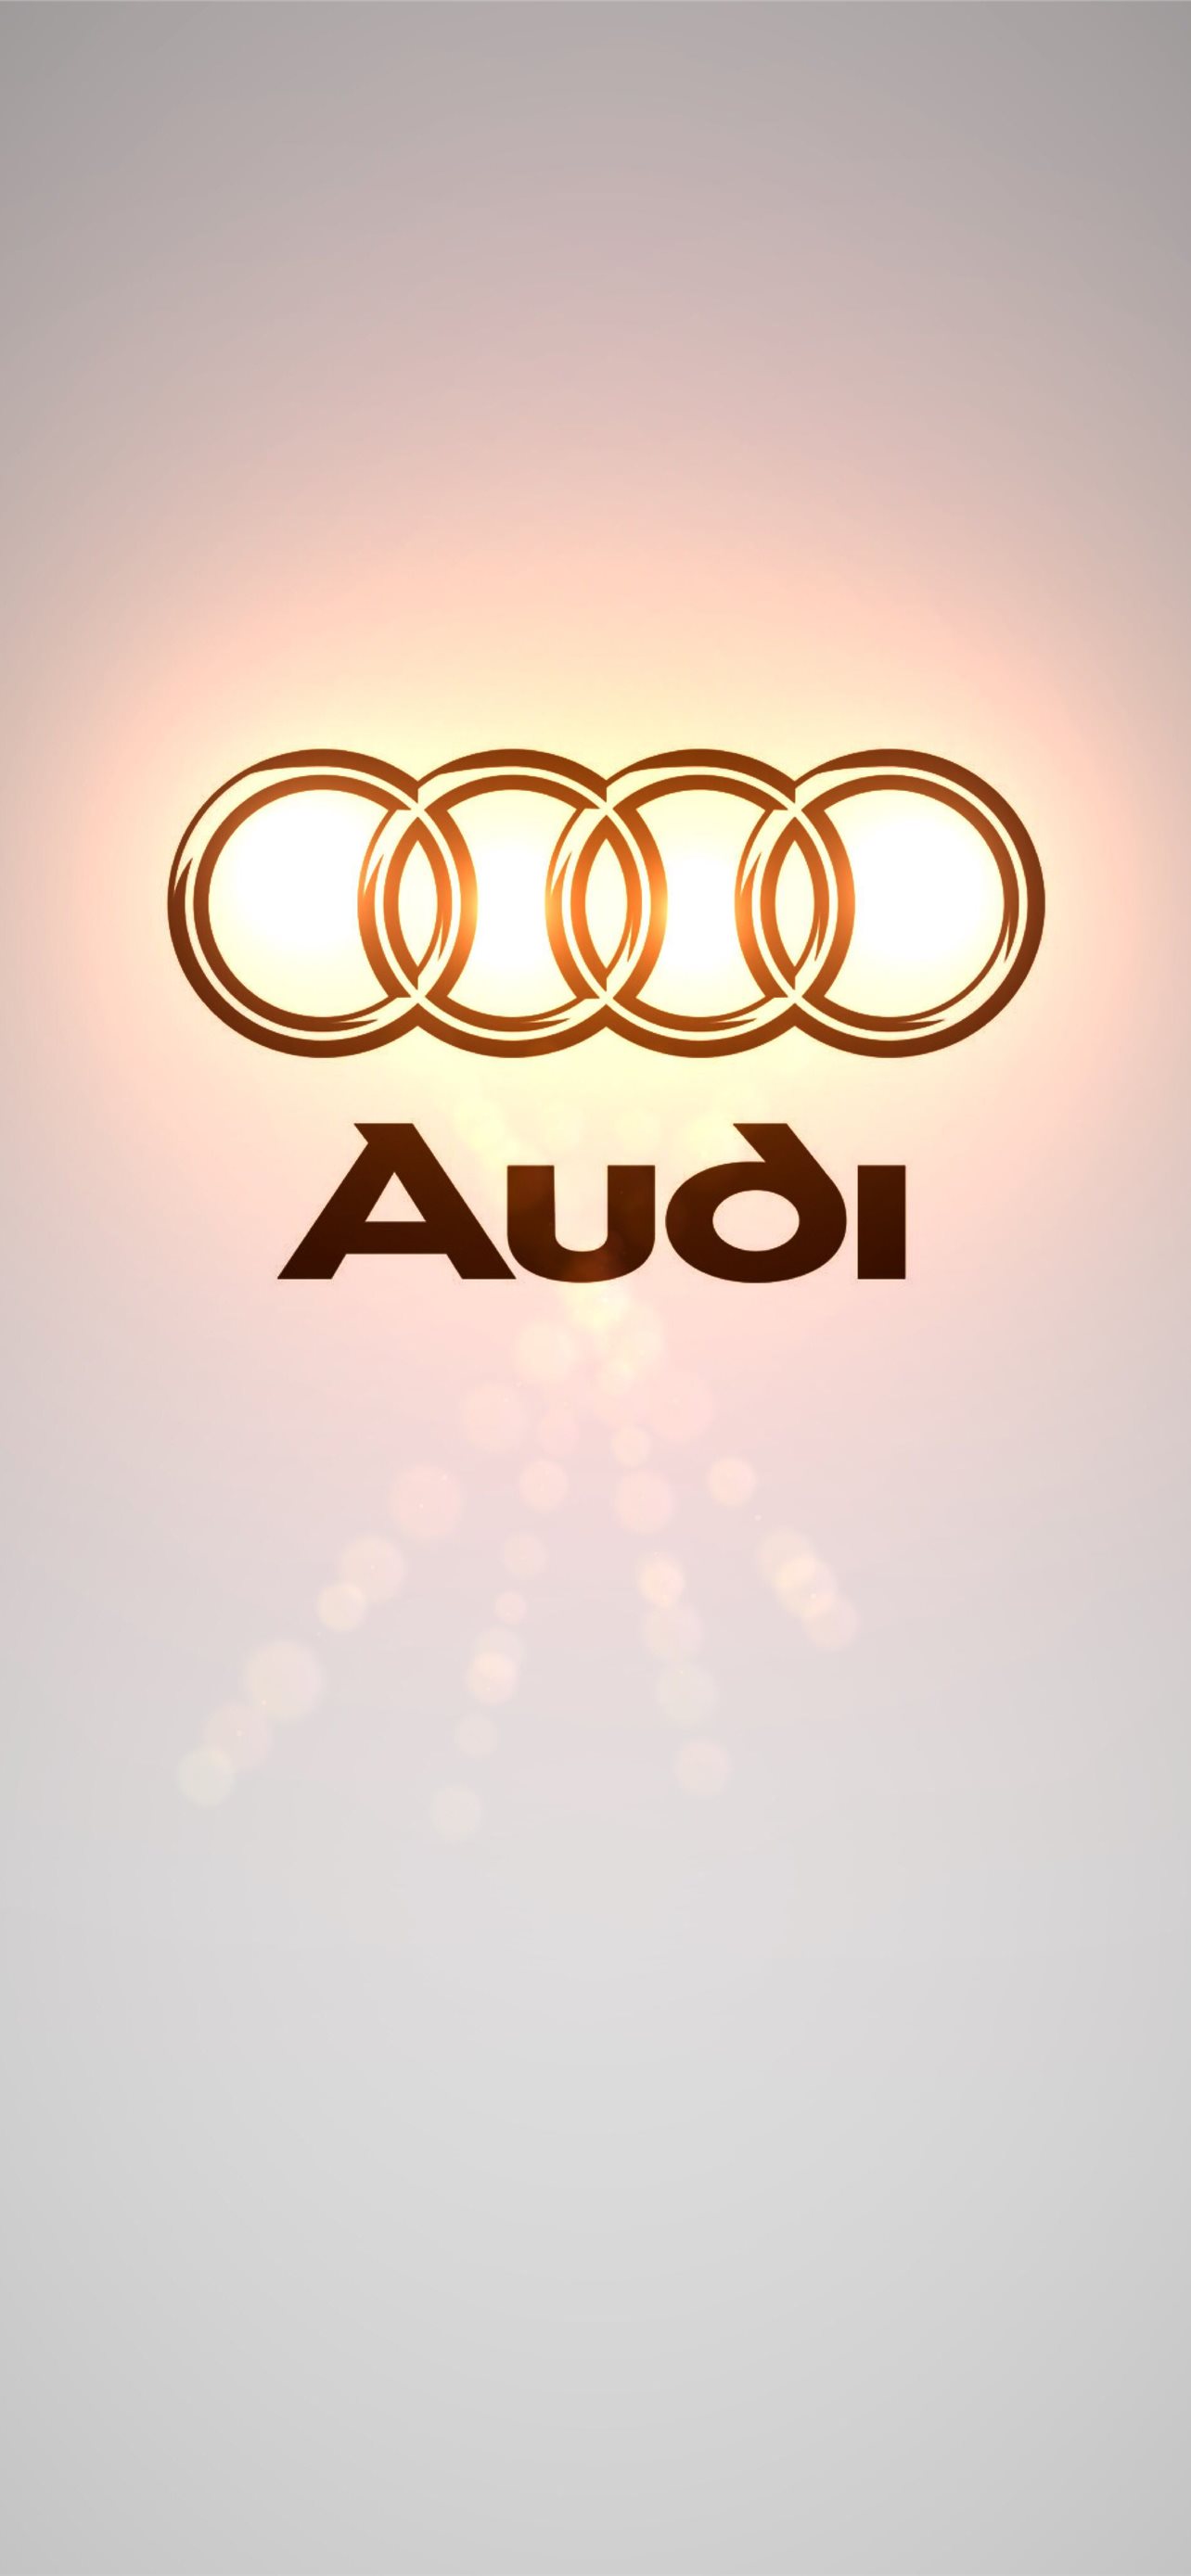 audi logo wallpaper high resolution